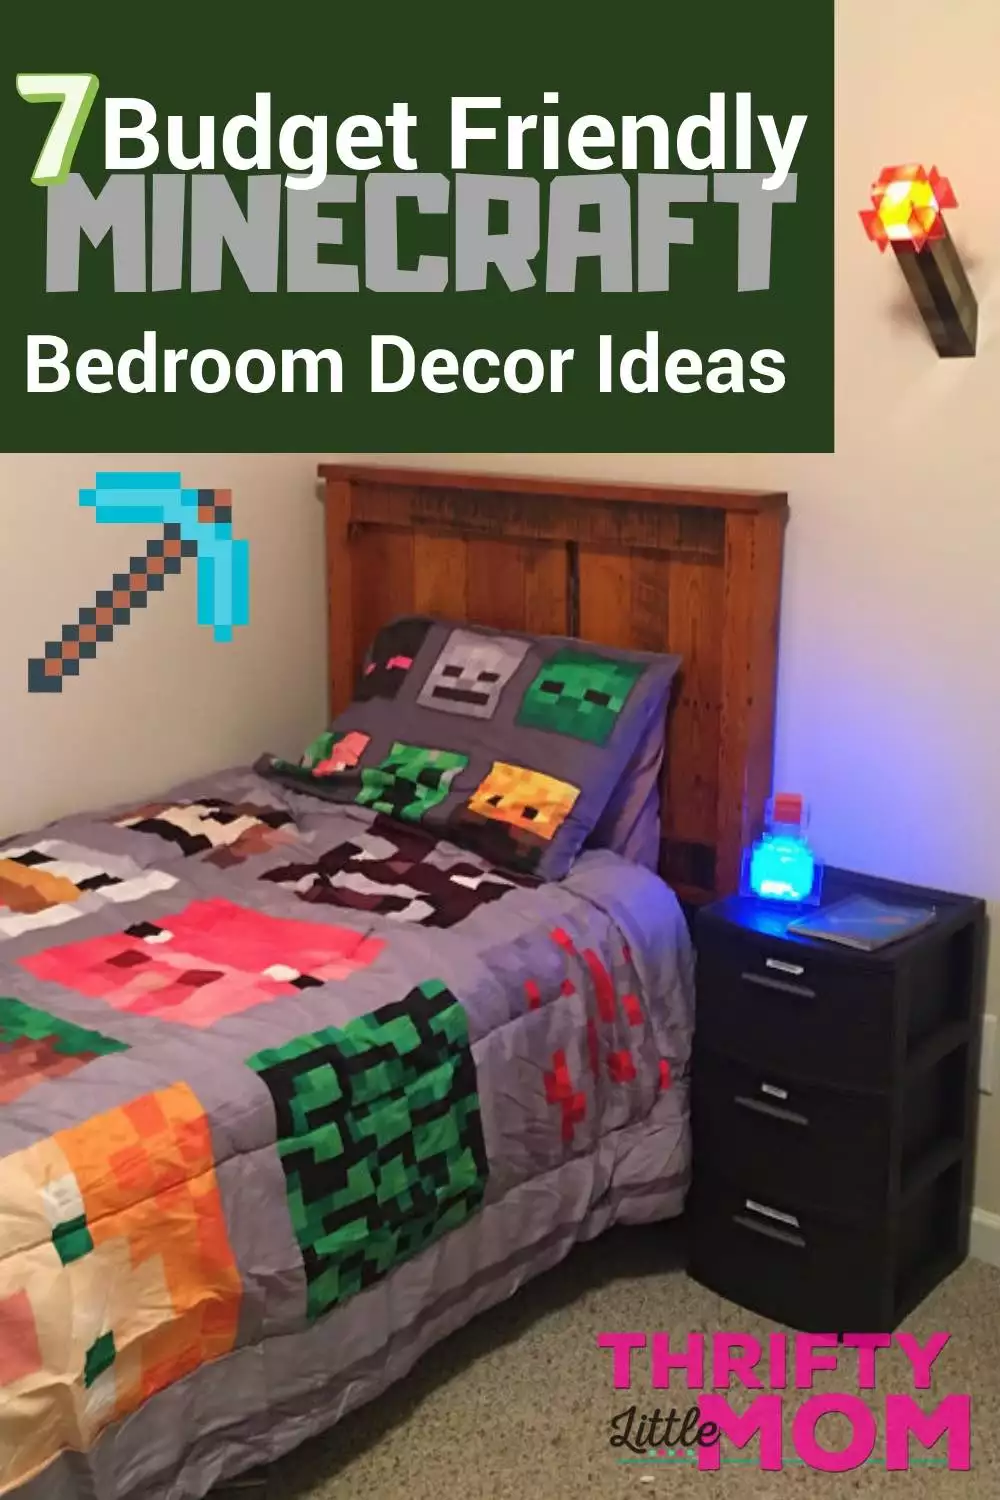 7 Budget Friendly Minecraft Bedroom Decor Ideas